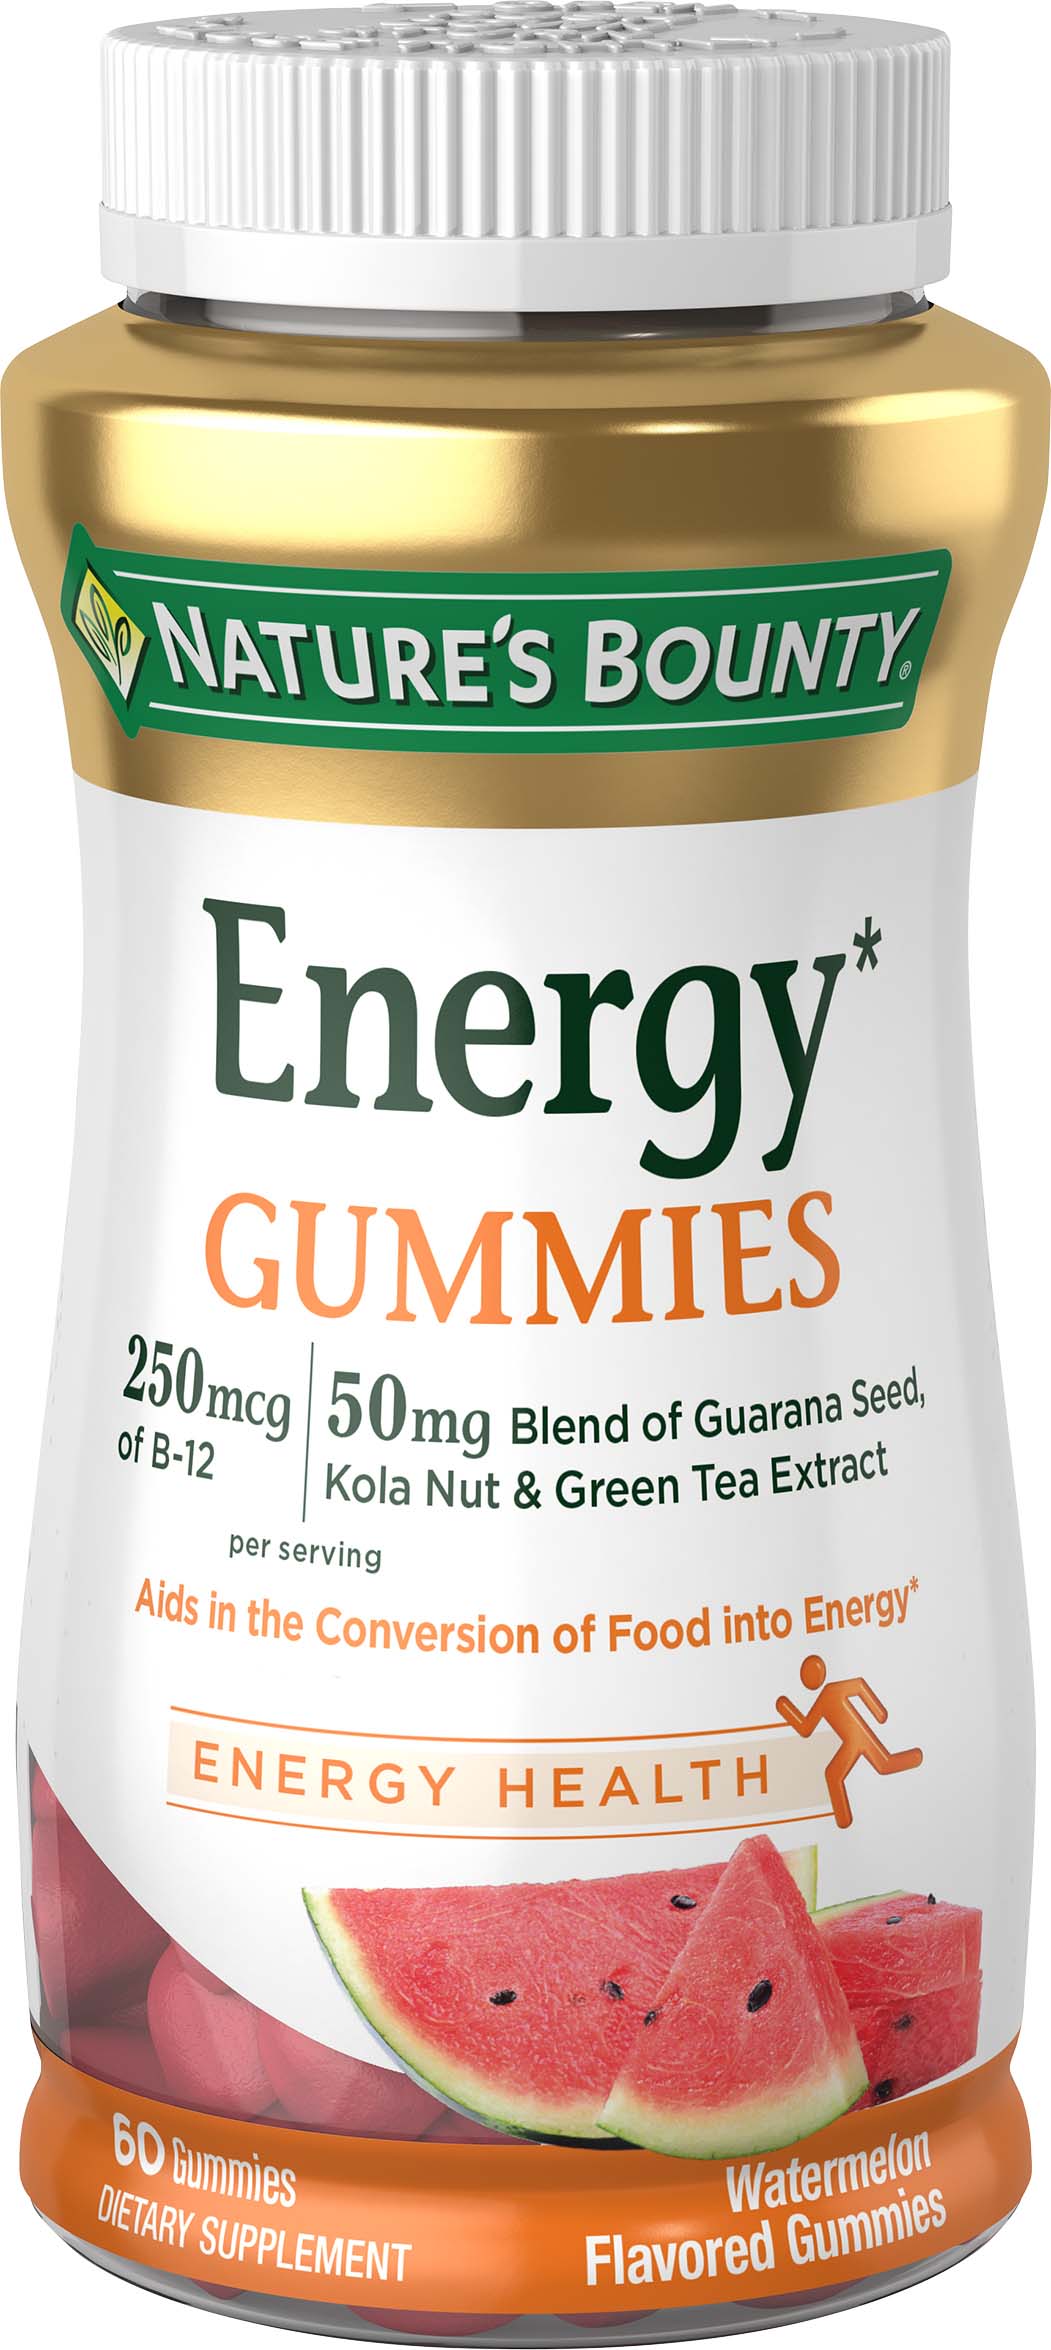 Nature's Bounty® Energy Complex Gummies, 245 mcg, Watermelon Flavor Gummies, 60 Ct - image 1 of 2